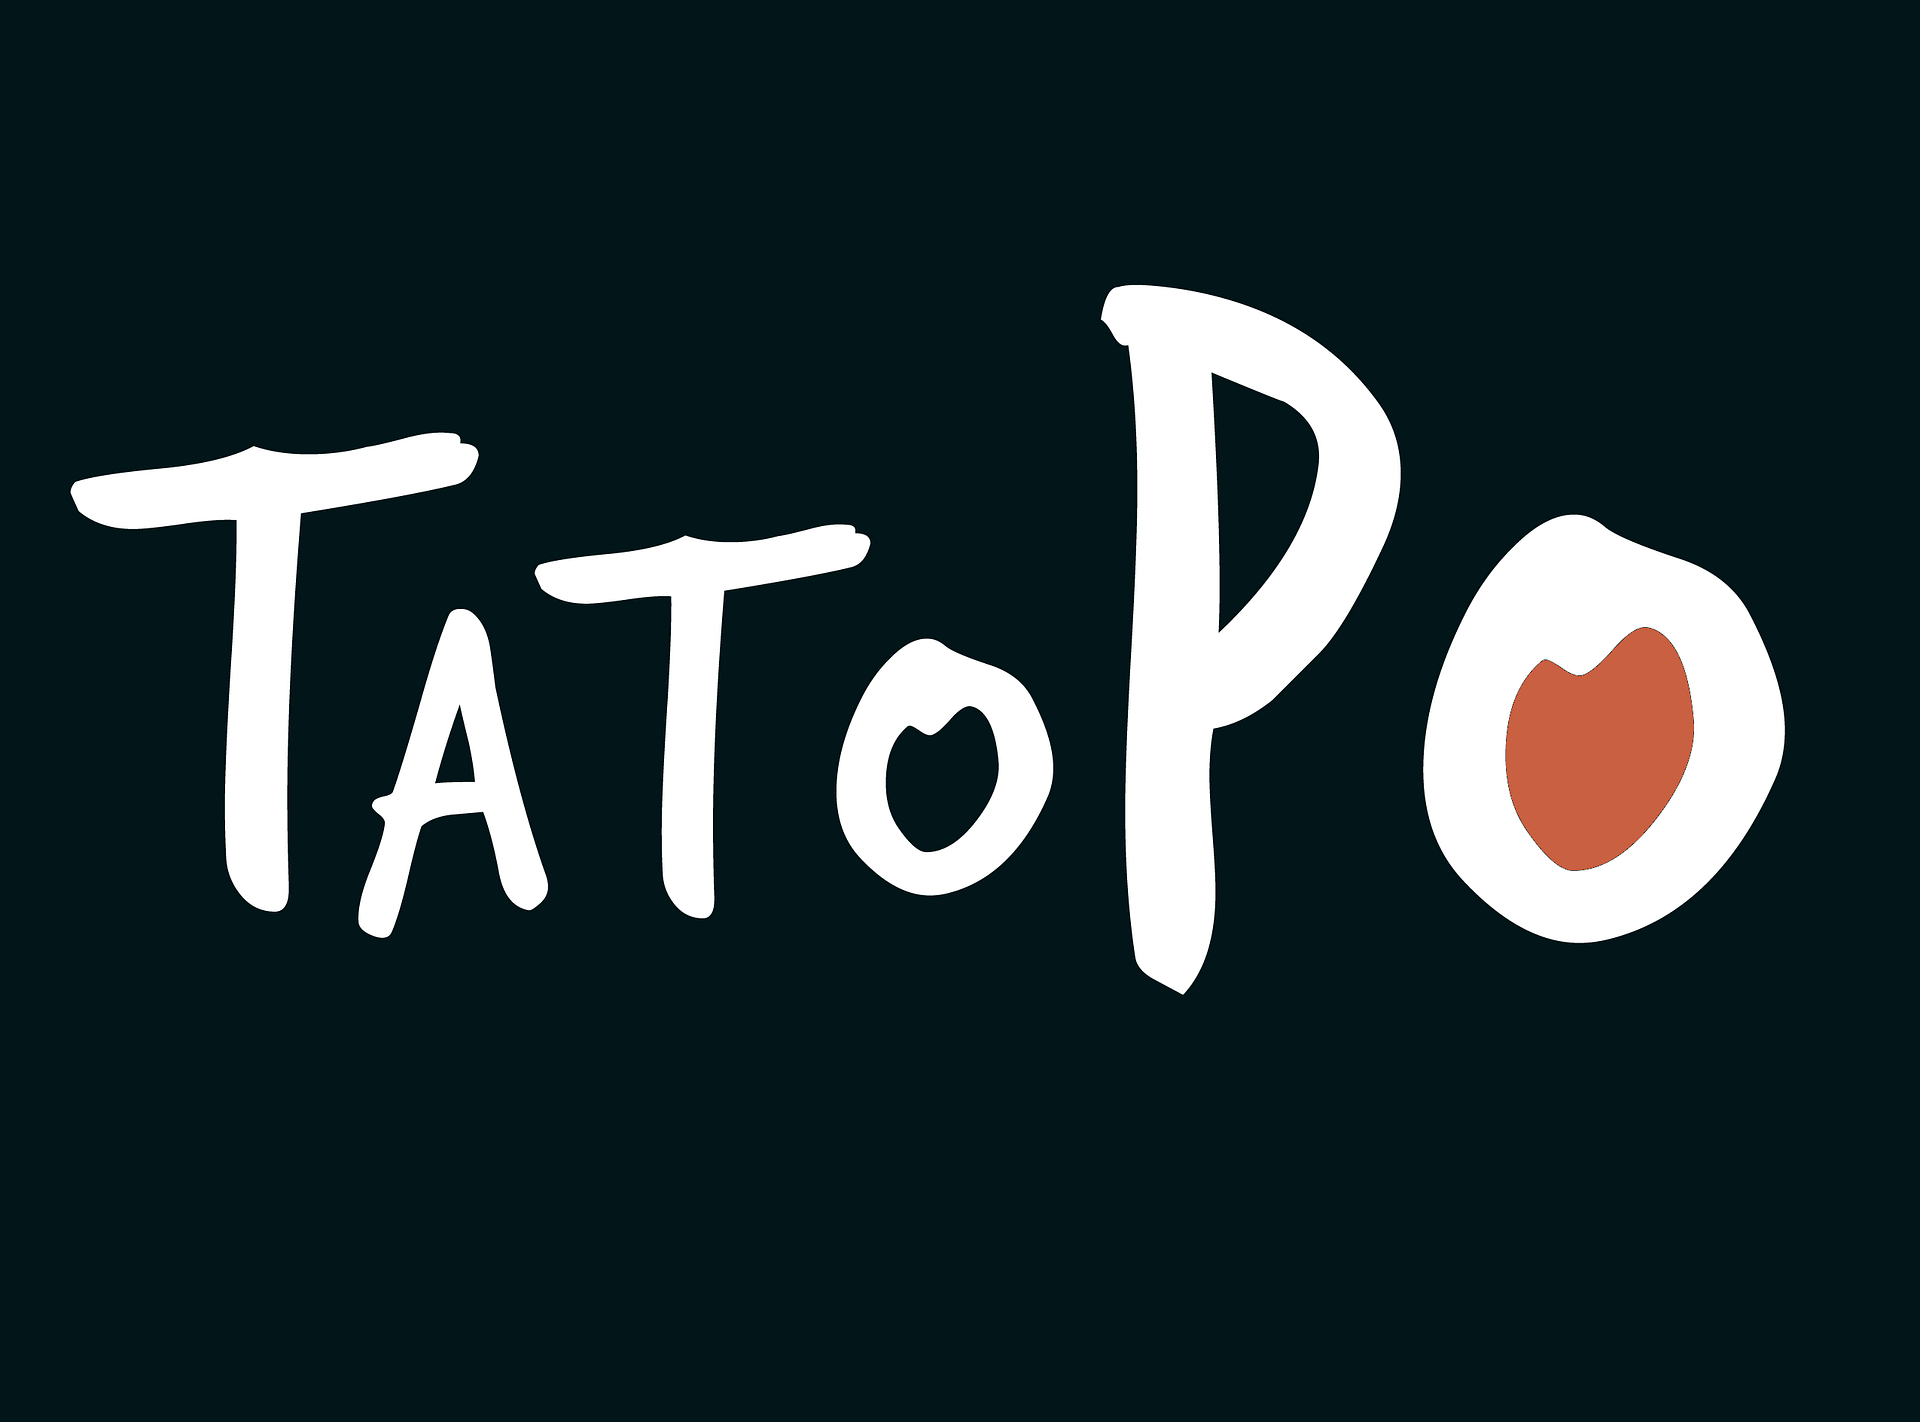 Tatopo Digital - Digital Elevation